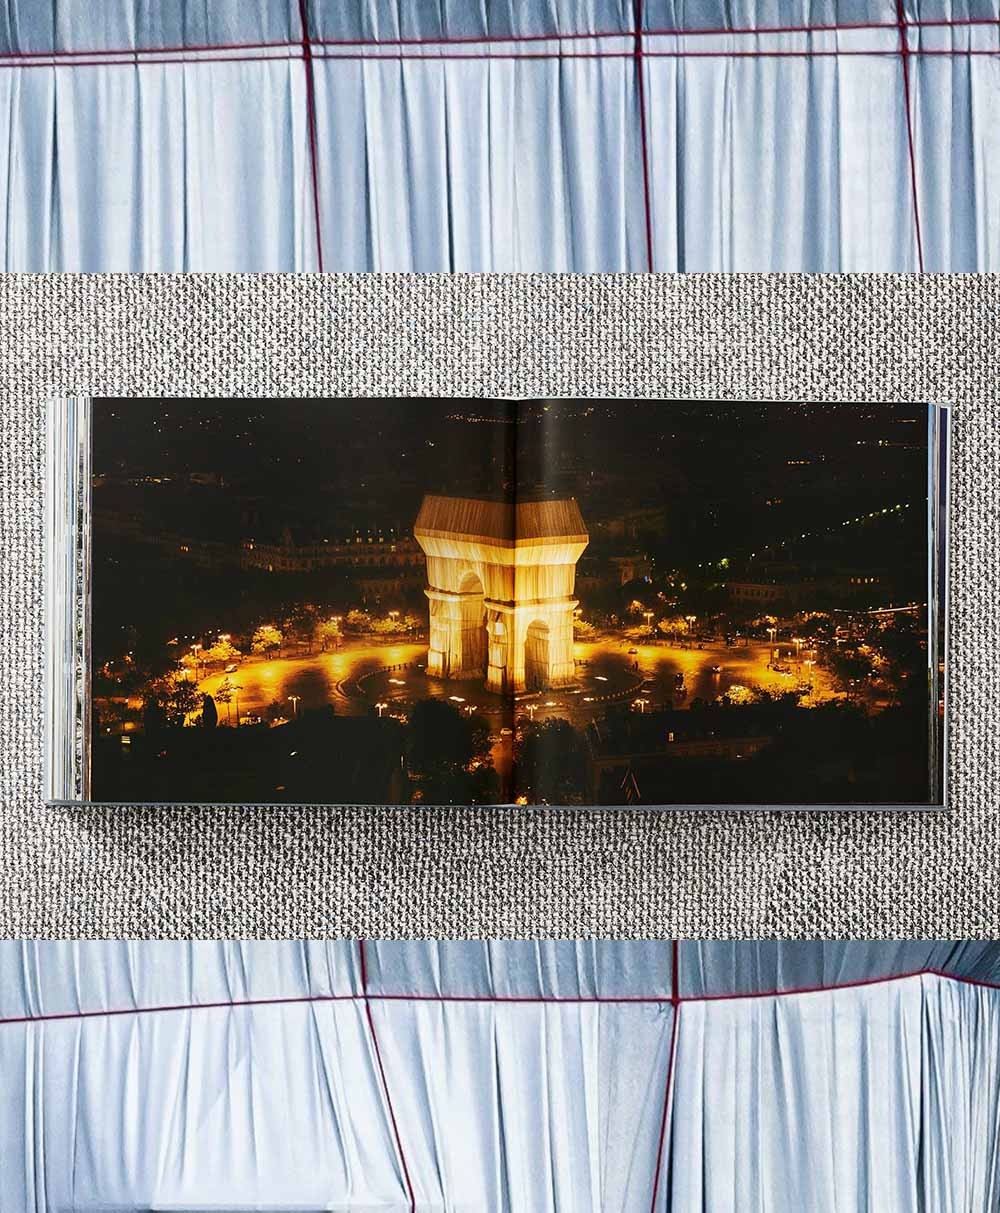 Produktbild des Bildbandes Christo and Jeanne-Claude. L'Arc de Triomphe, Wrapped, Paris vom Taschen Verlag - RAUM concept store